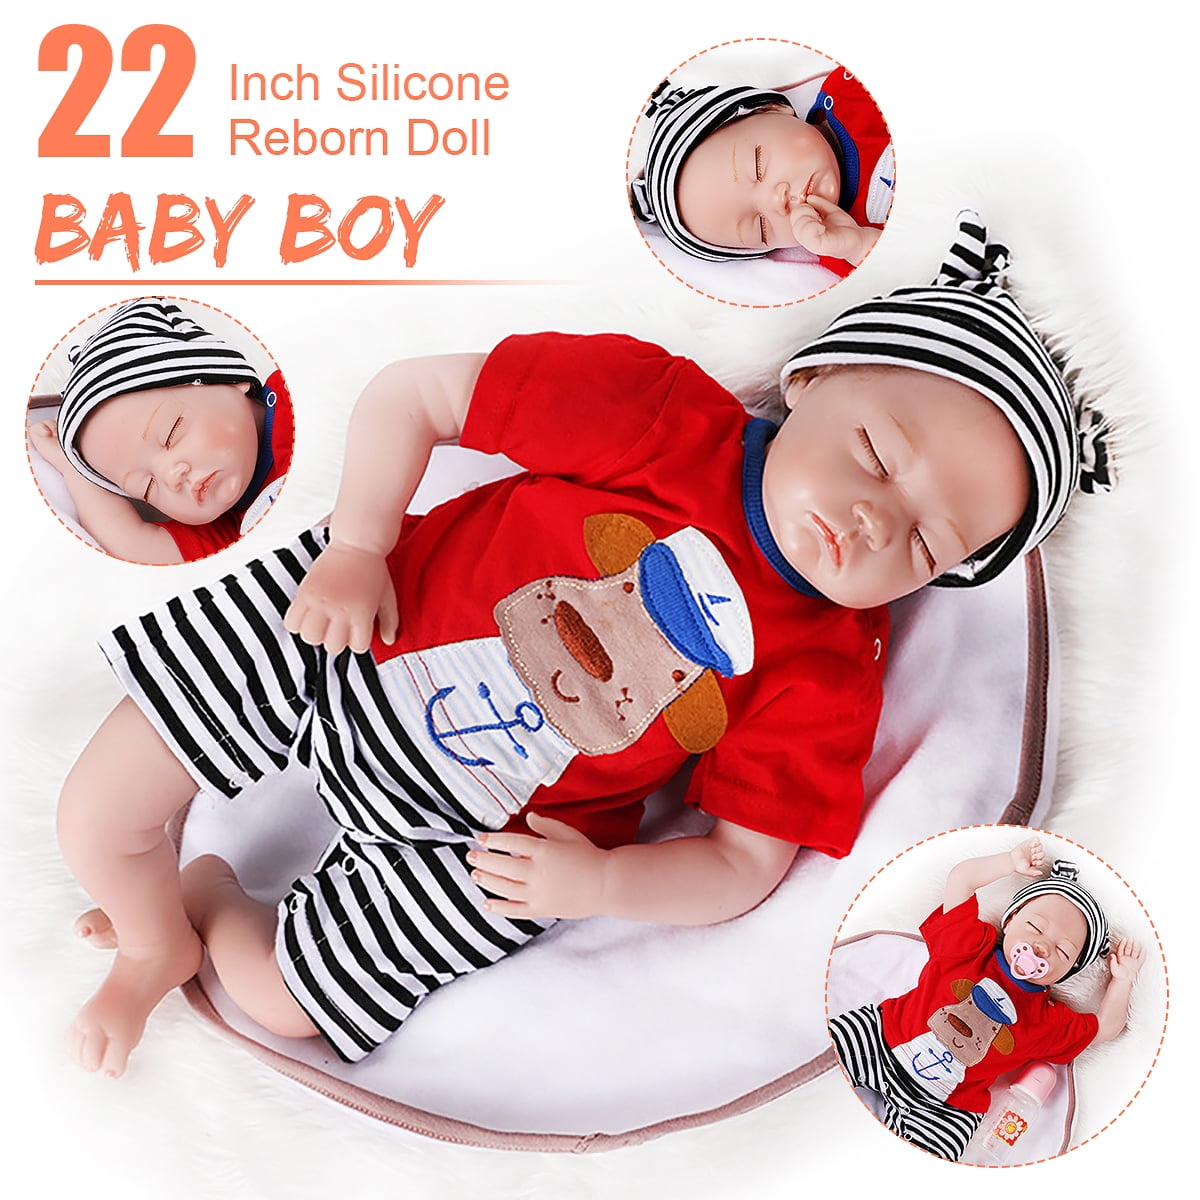 Details about   22" Reborn Baby Dolls Realistic Newborn Lifelike Vinyl Silicone Toddler Doll Boy